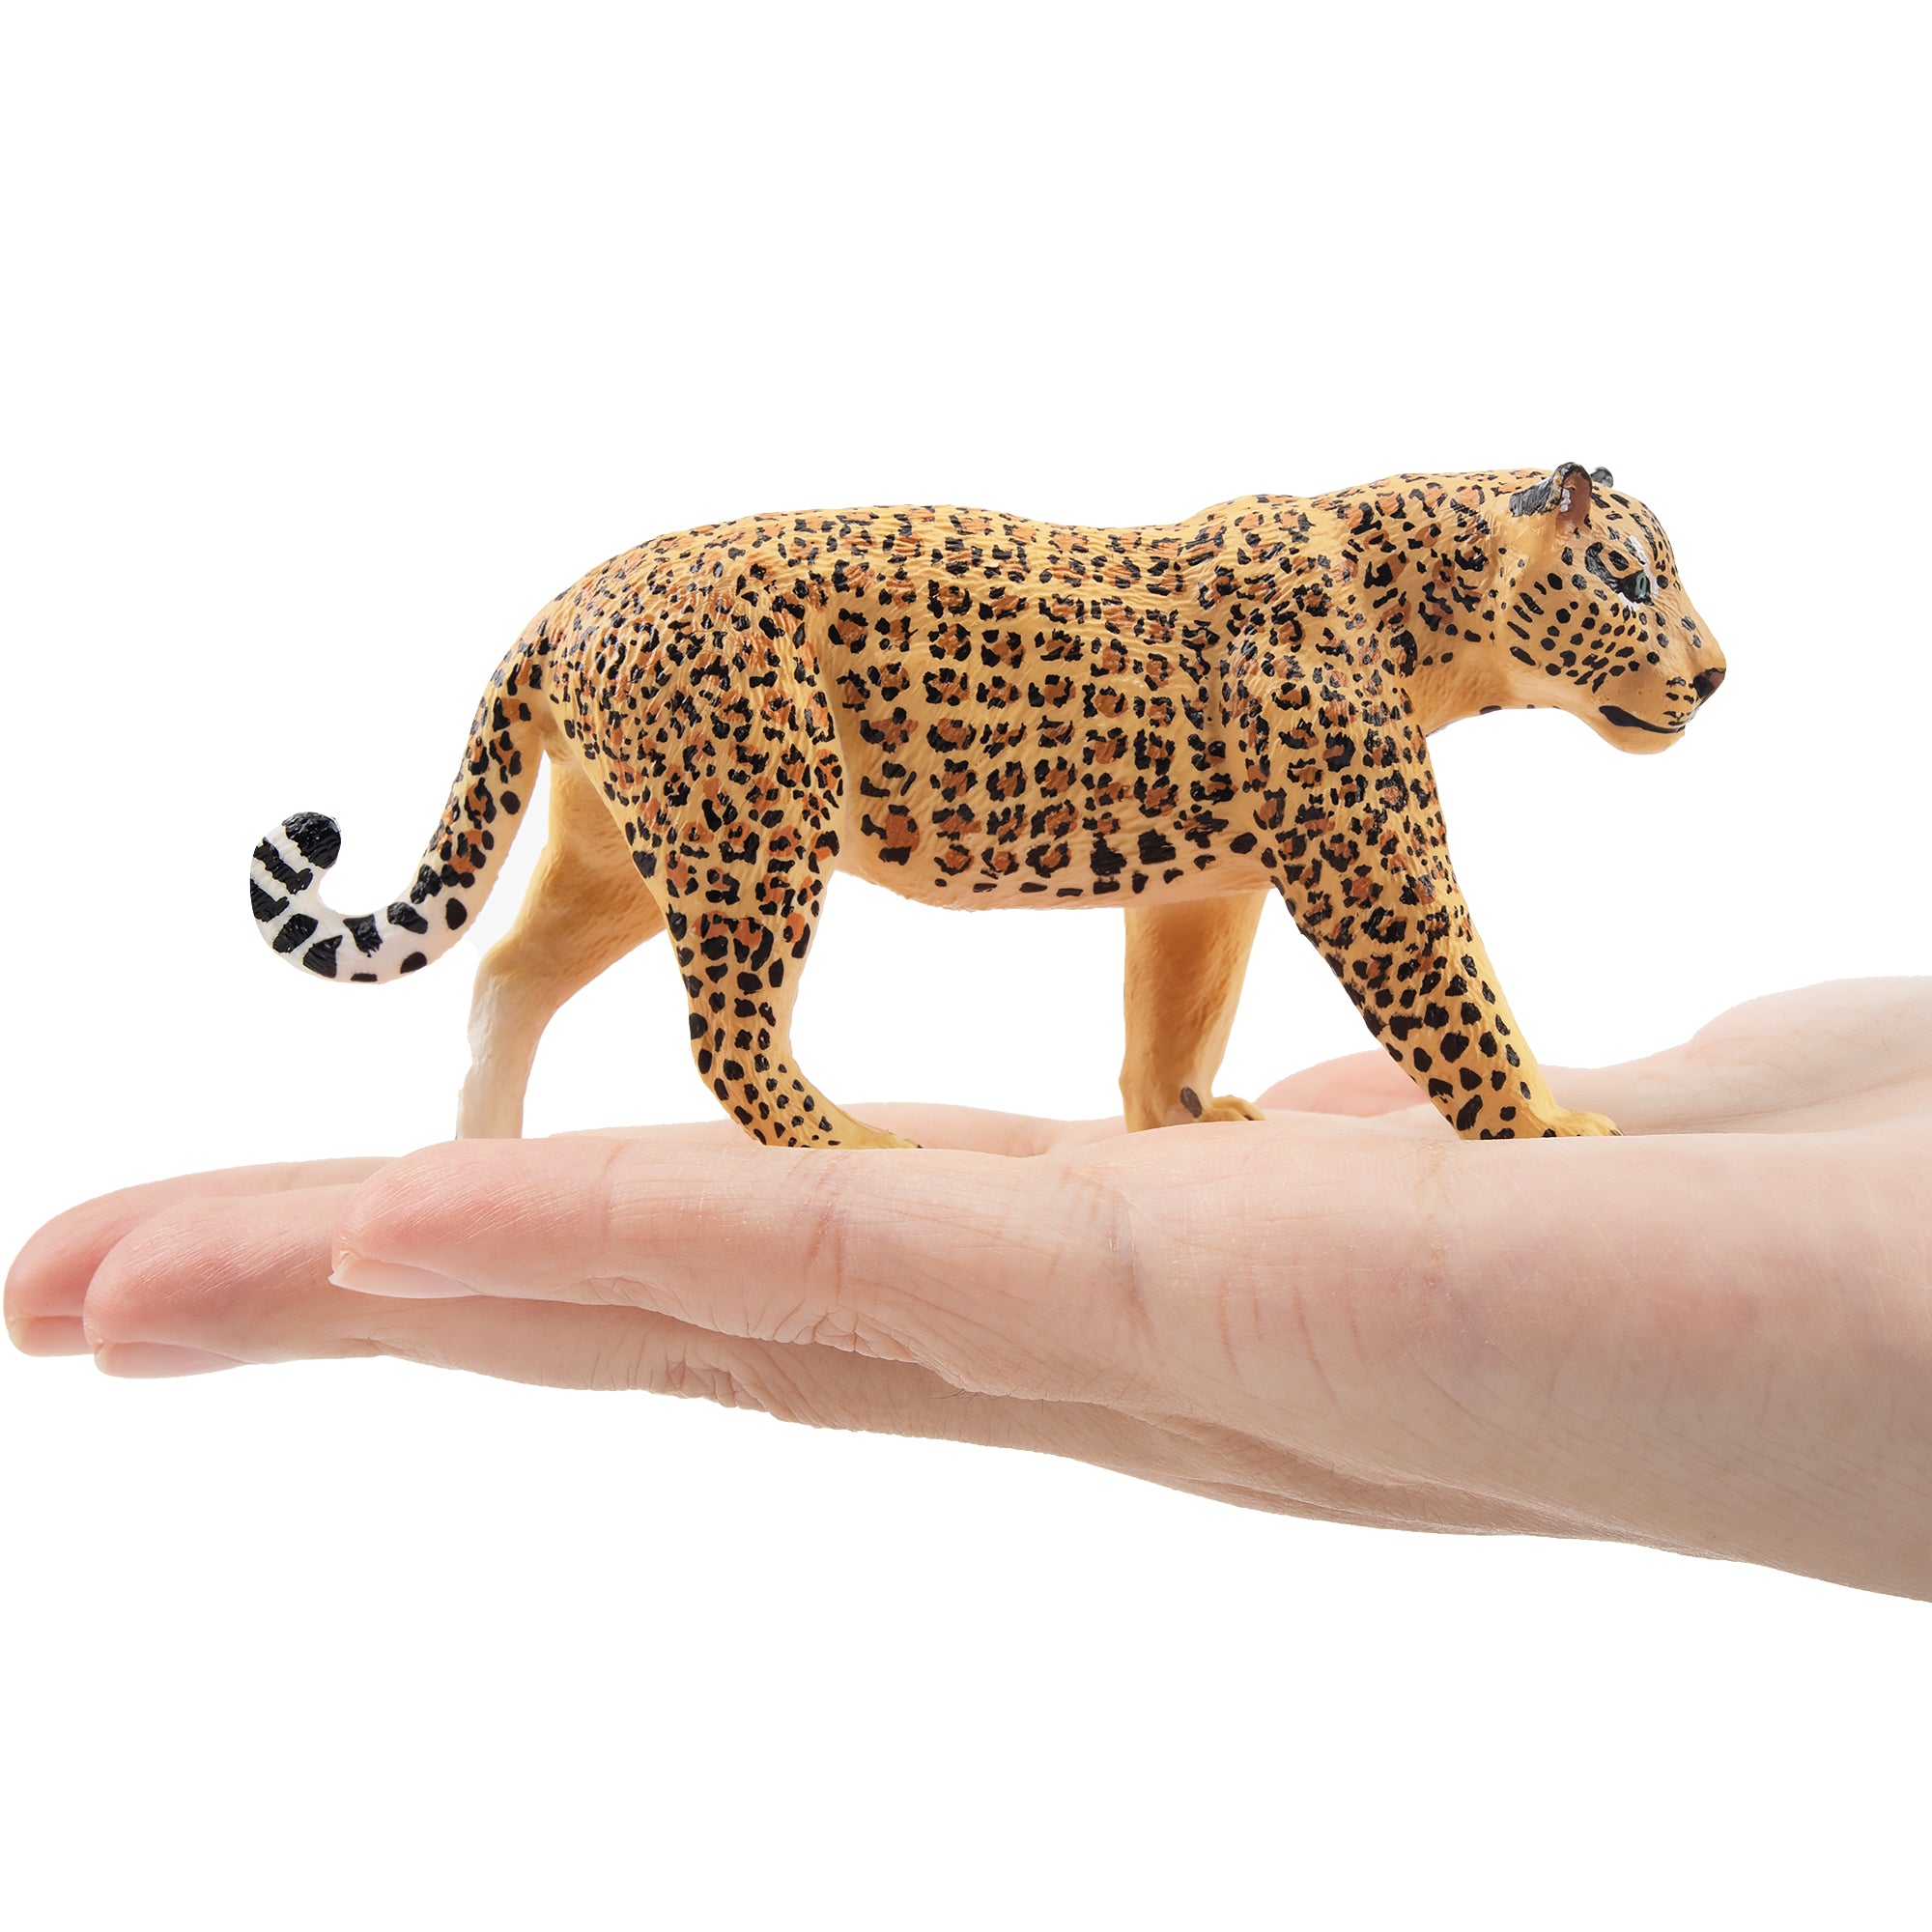 Toymany Jaguar Figurine Toy-on hand